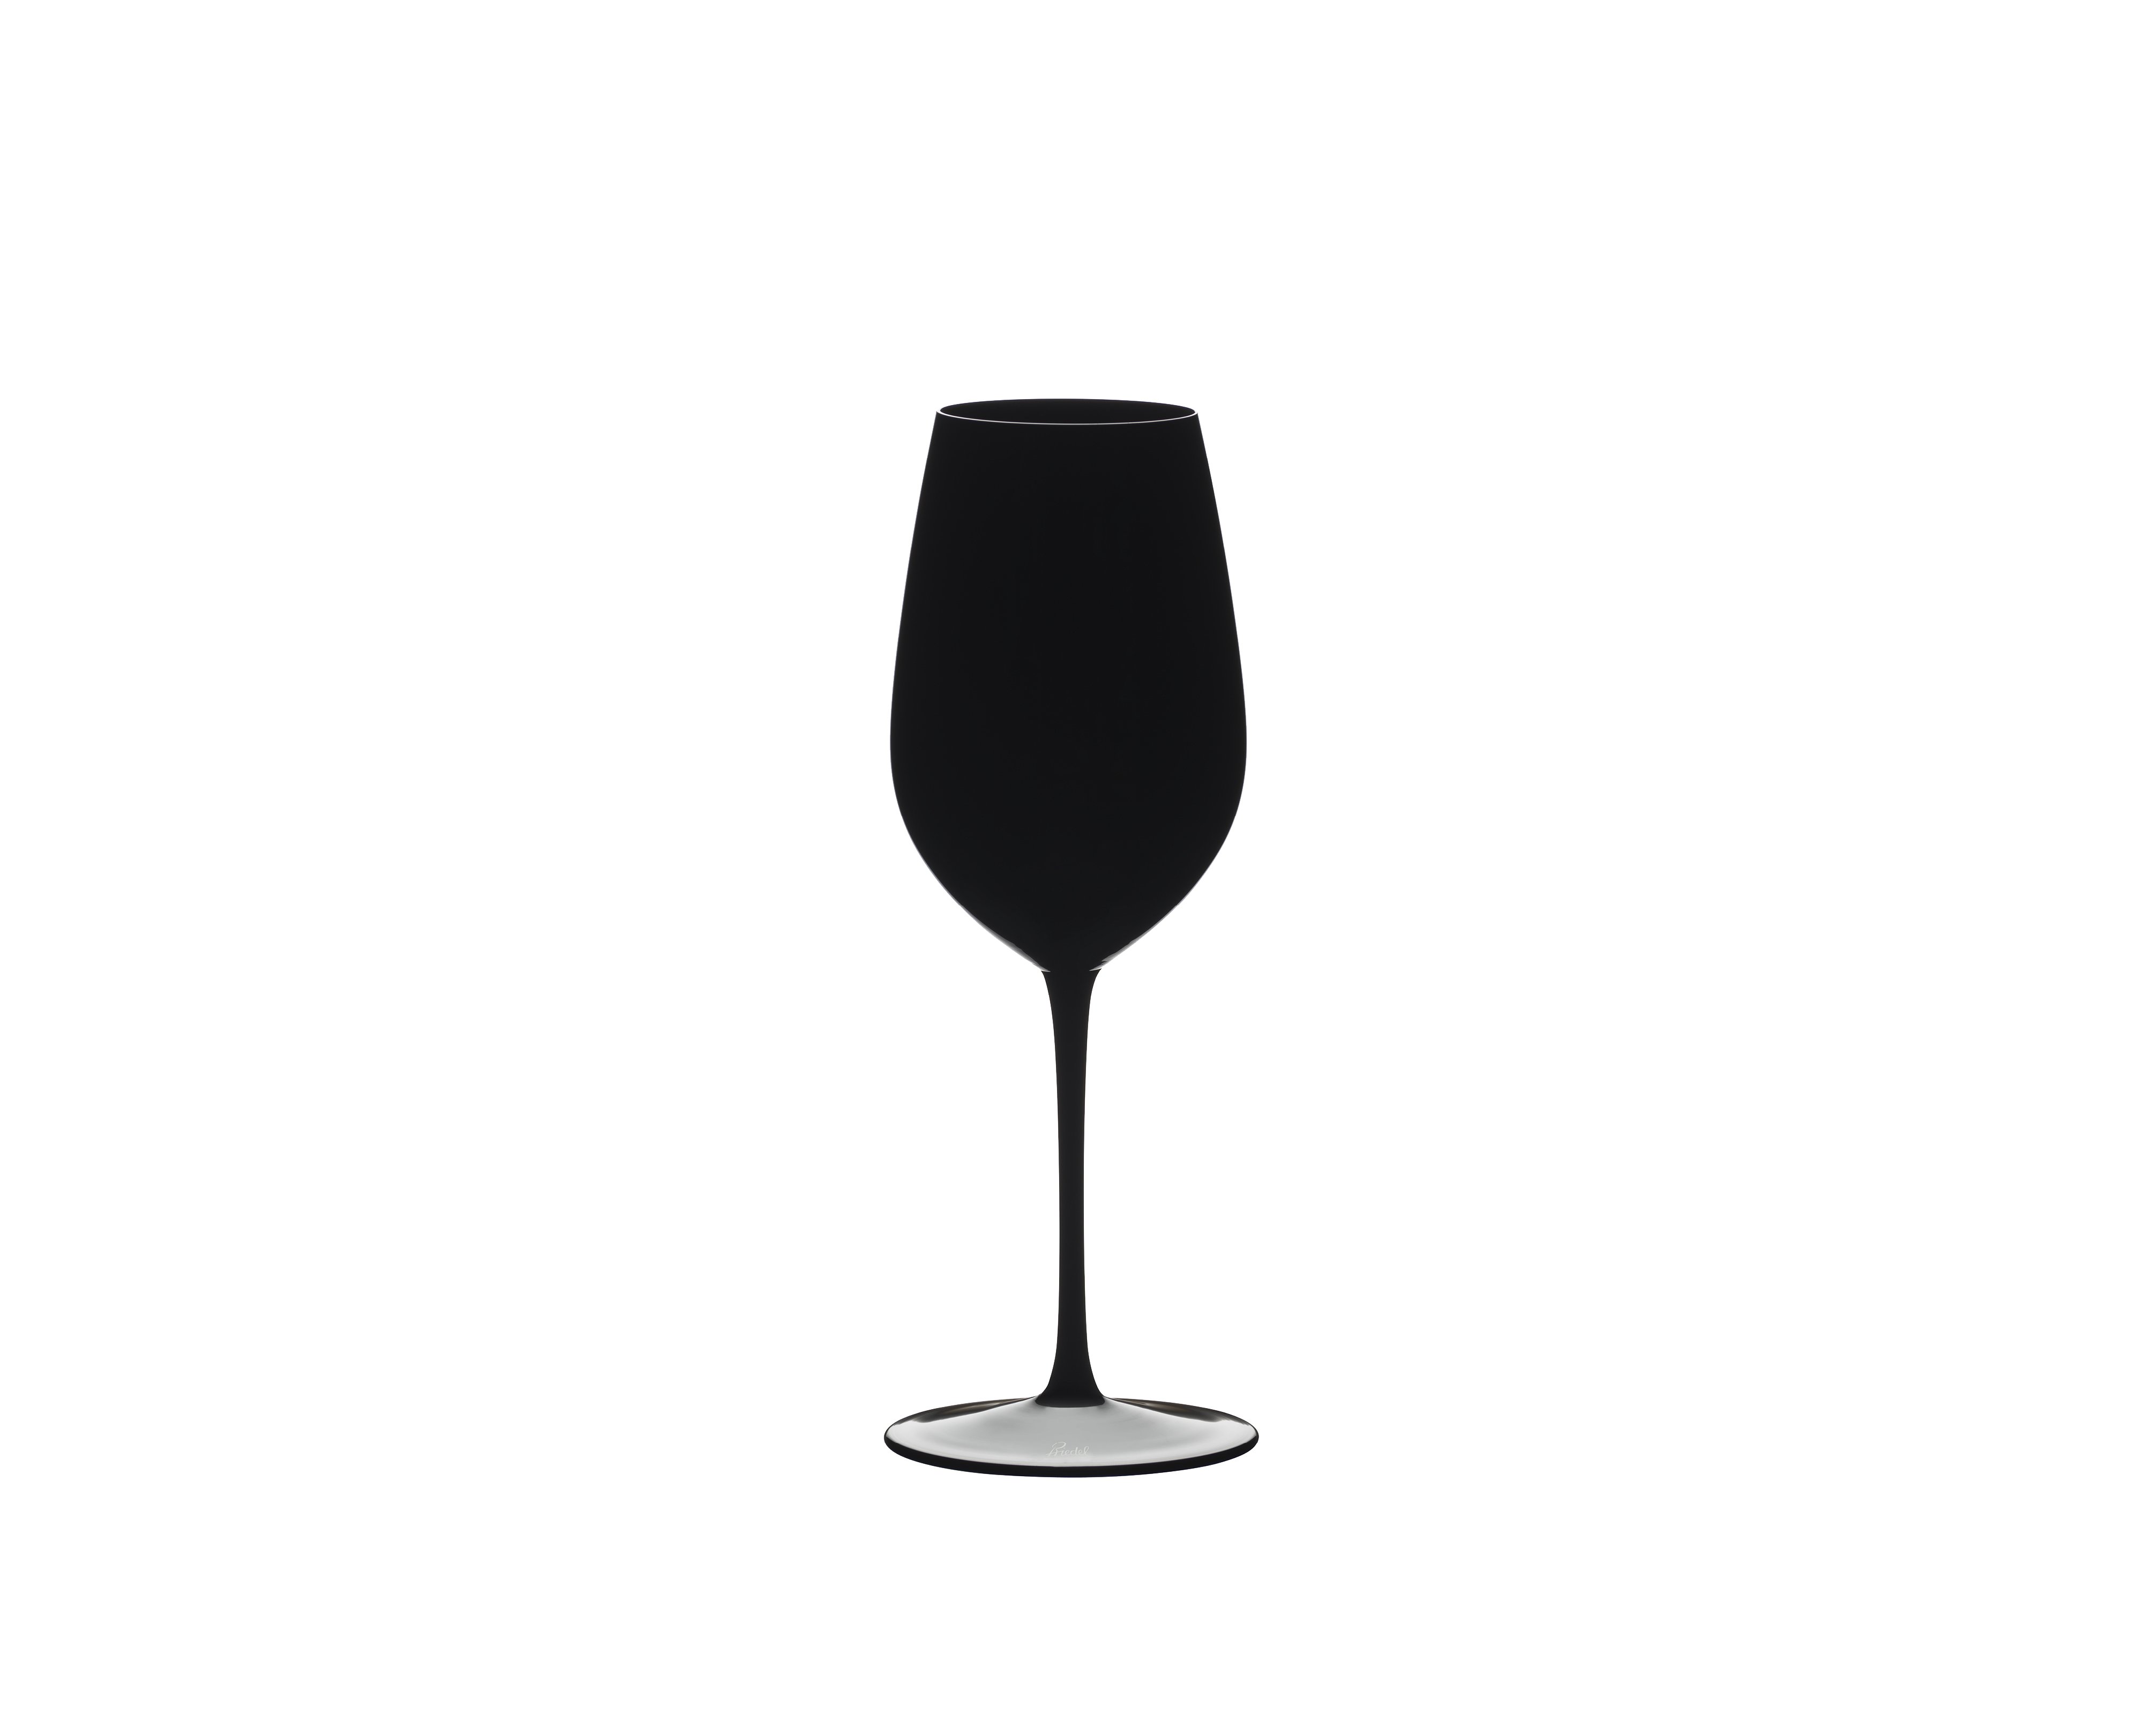 Riedel Sommeliers Sauternes Wine Glass - The Wine Kit